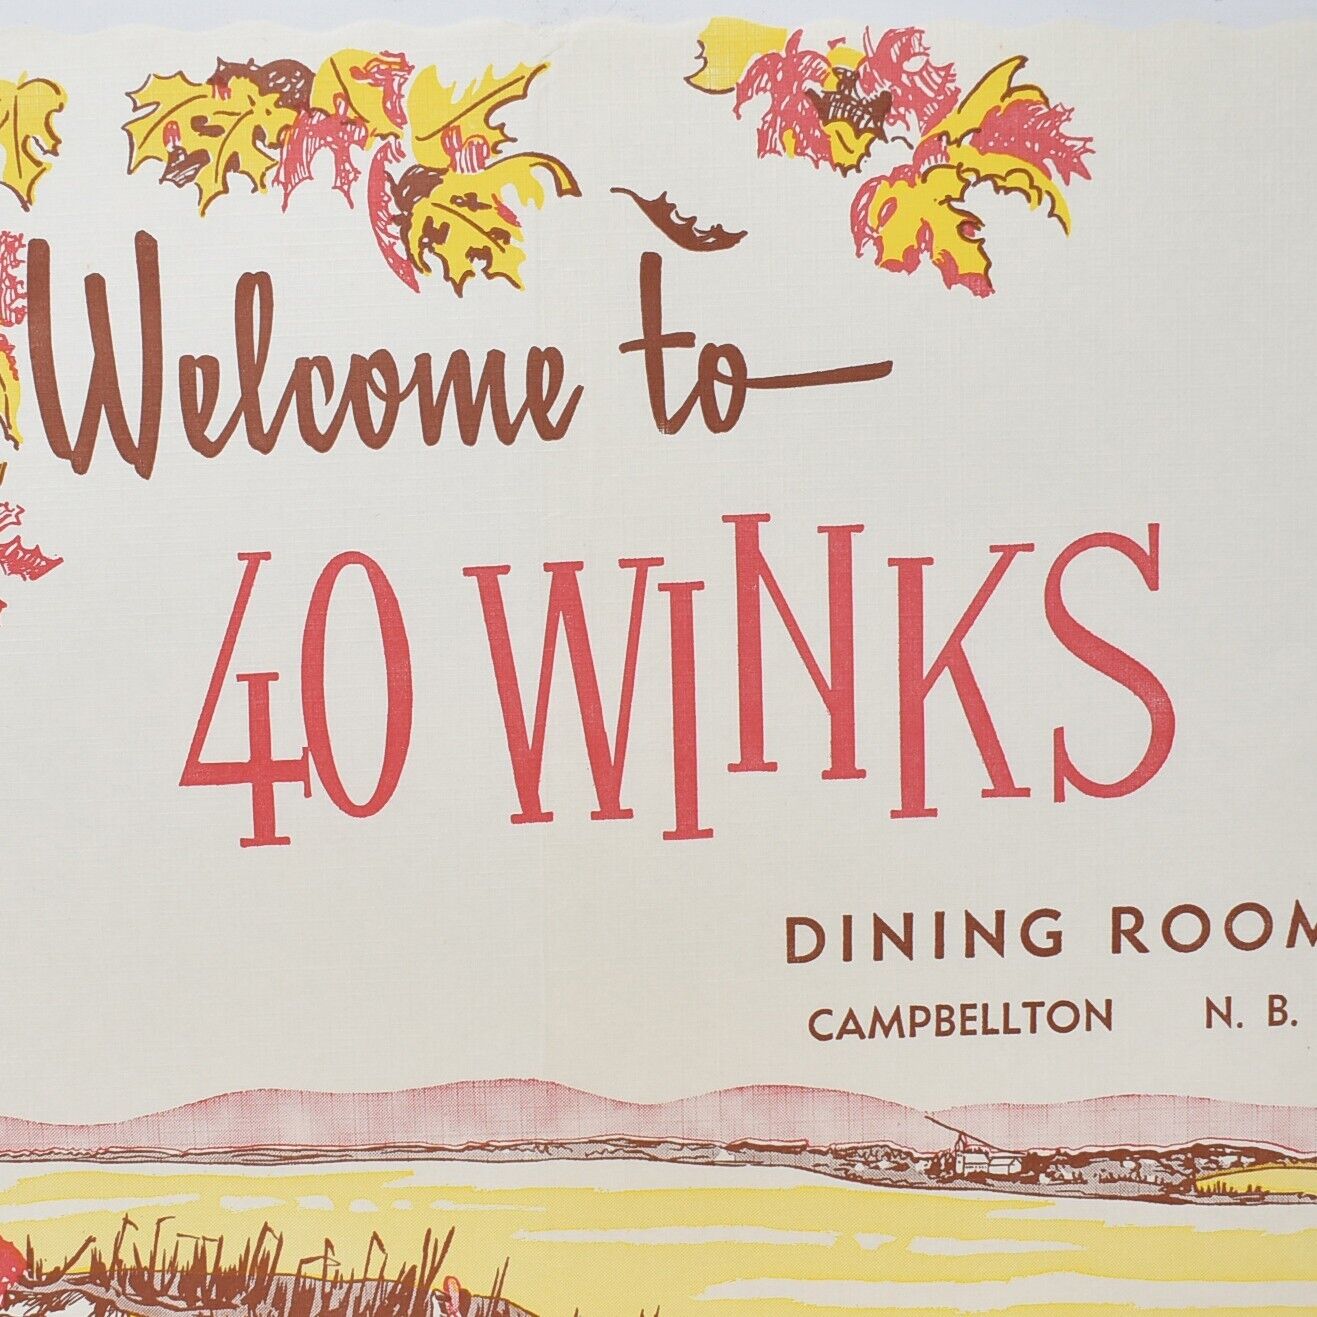 1950s 40 Winks Dining Room Restaurant Placemat Campbellton New Brunswick Canada